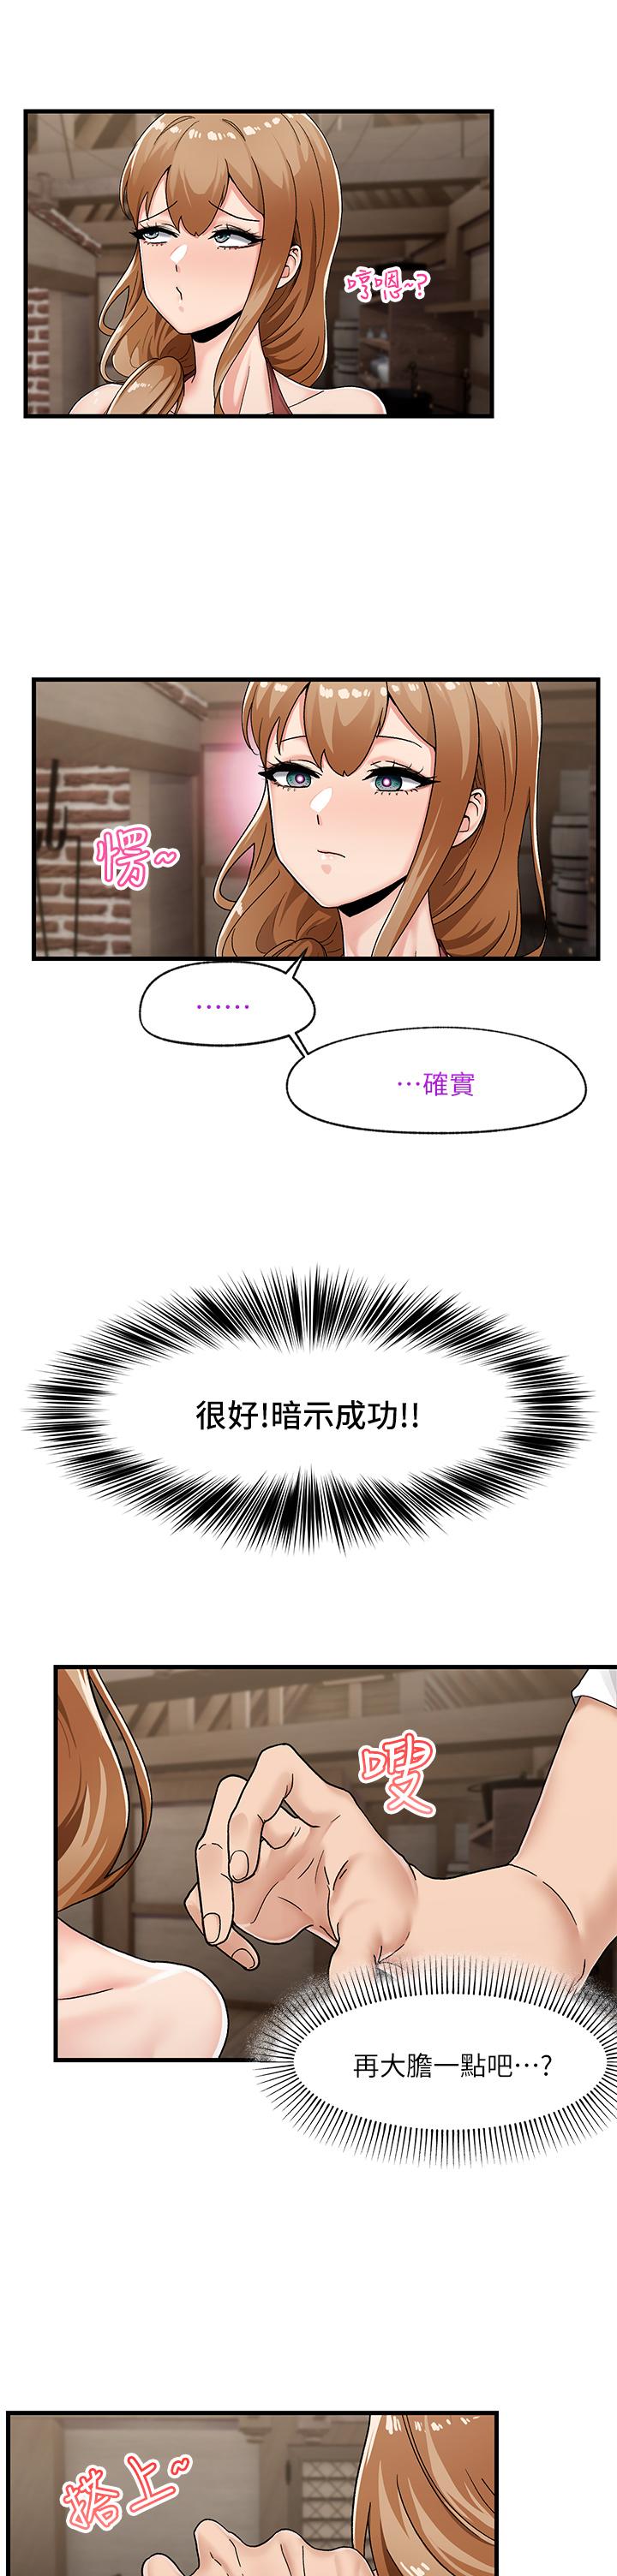 King of hypnotist in Isekai (01-08)-chinese 異世界催眠王 1-8話-chinese